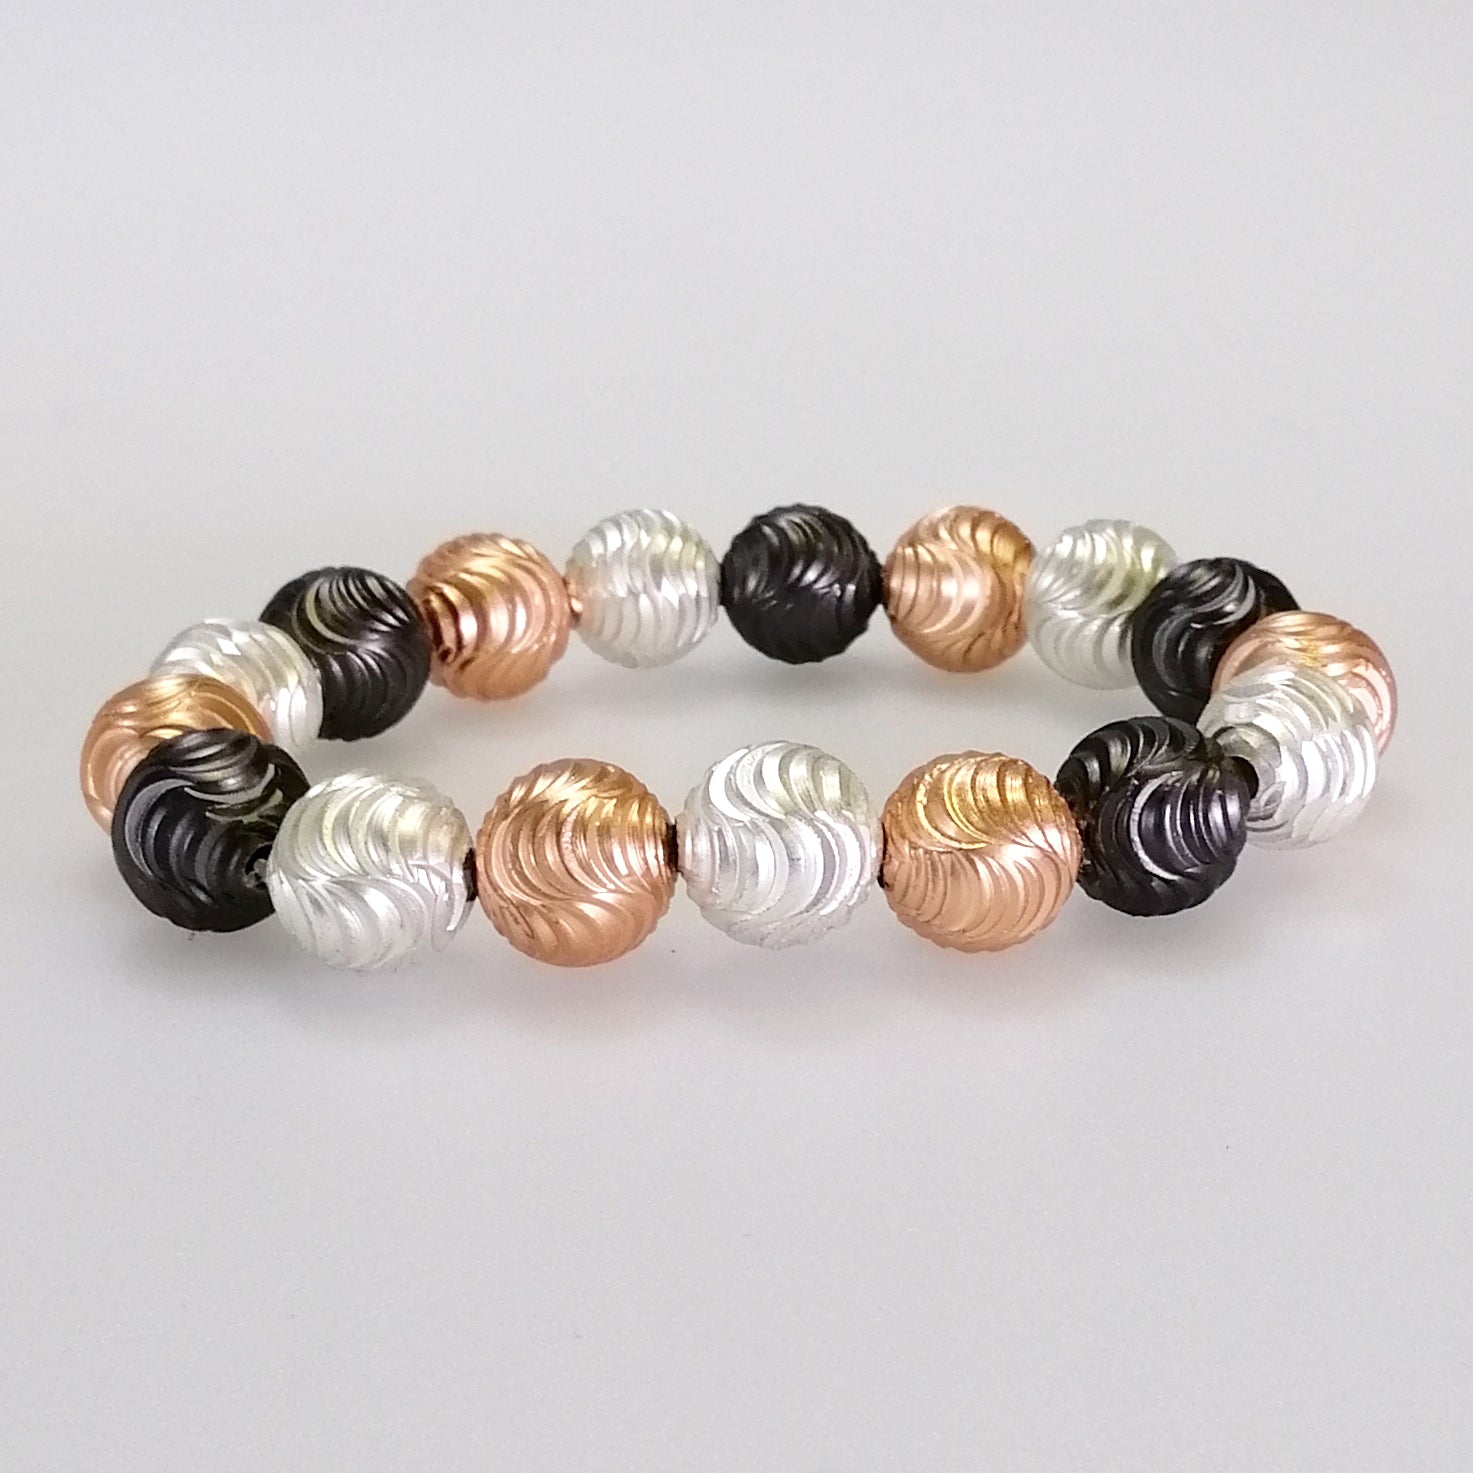 Kiwicraft - Three Tone Beads Bracelet